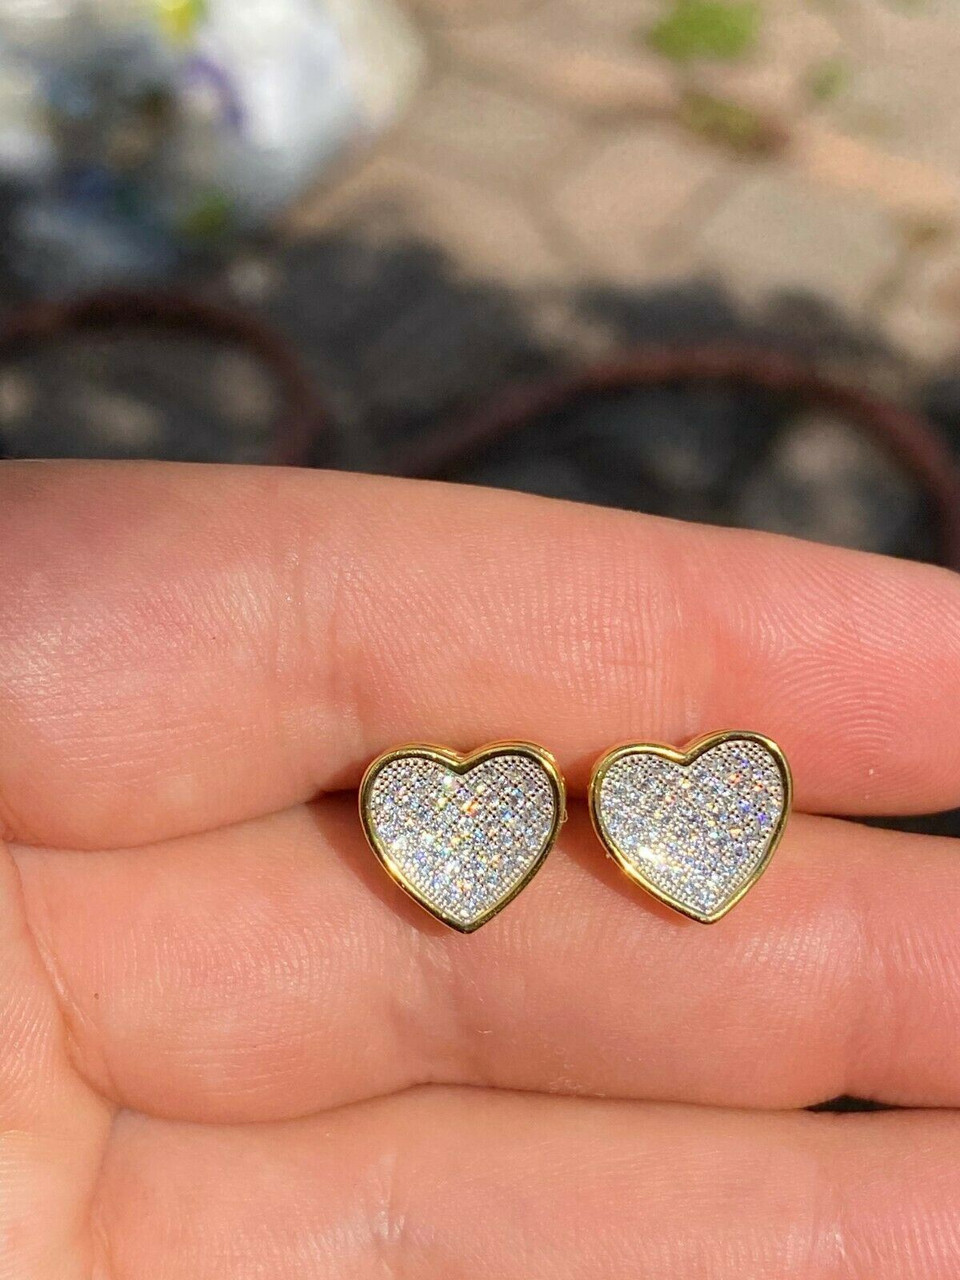 Tiny Heart Earrings, Heart Stud Earrings, Small Hearts Earrings Silver,  Minimalist Heart Earrings, Bridesmaid Gift, Everyday Earrings. - Etsy |  Clous d'oreilles, Collier fantaisie femme, Piercing au oreille